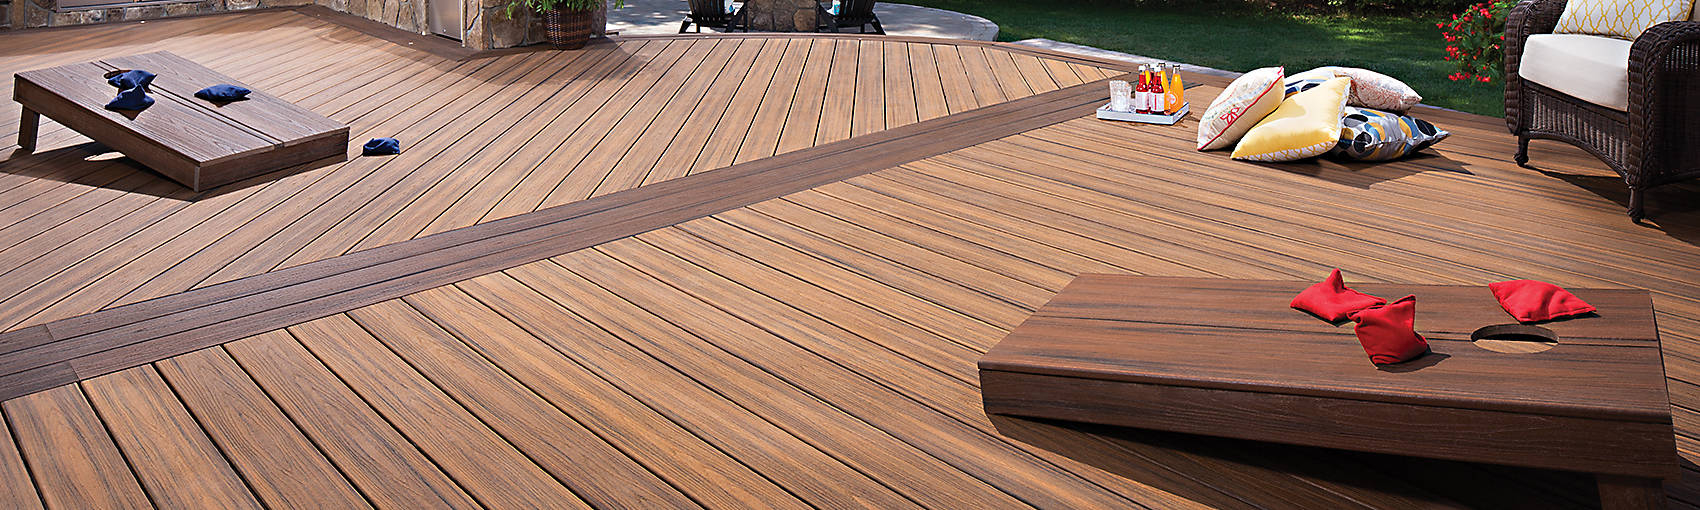 Composite Decking Wpc Wood Alternative Decking Trex inside dimensions 1700 X 510